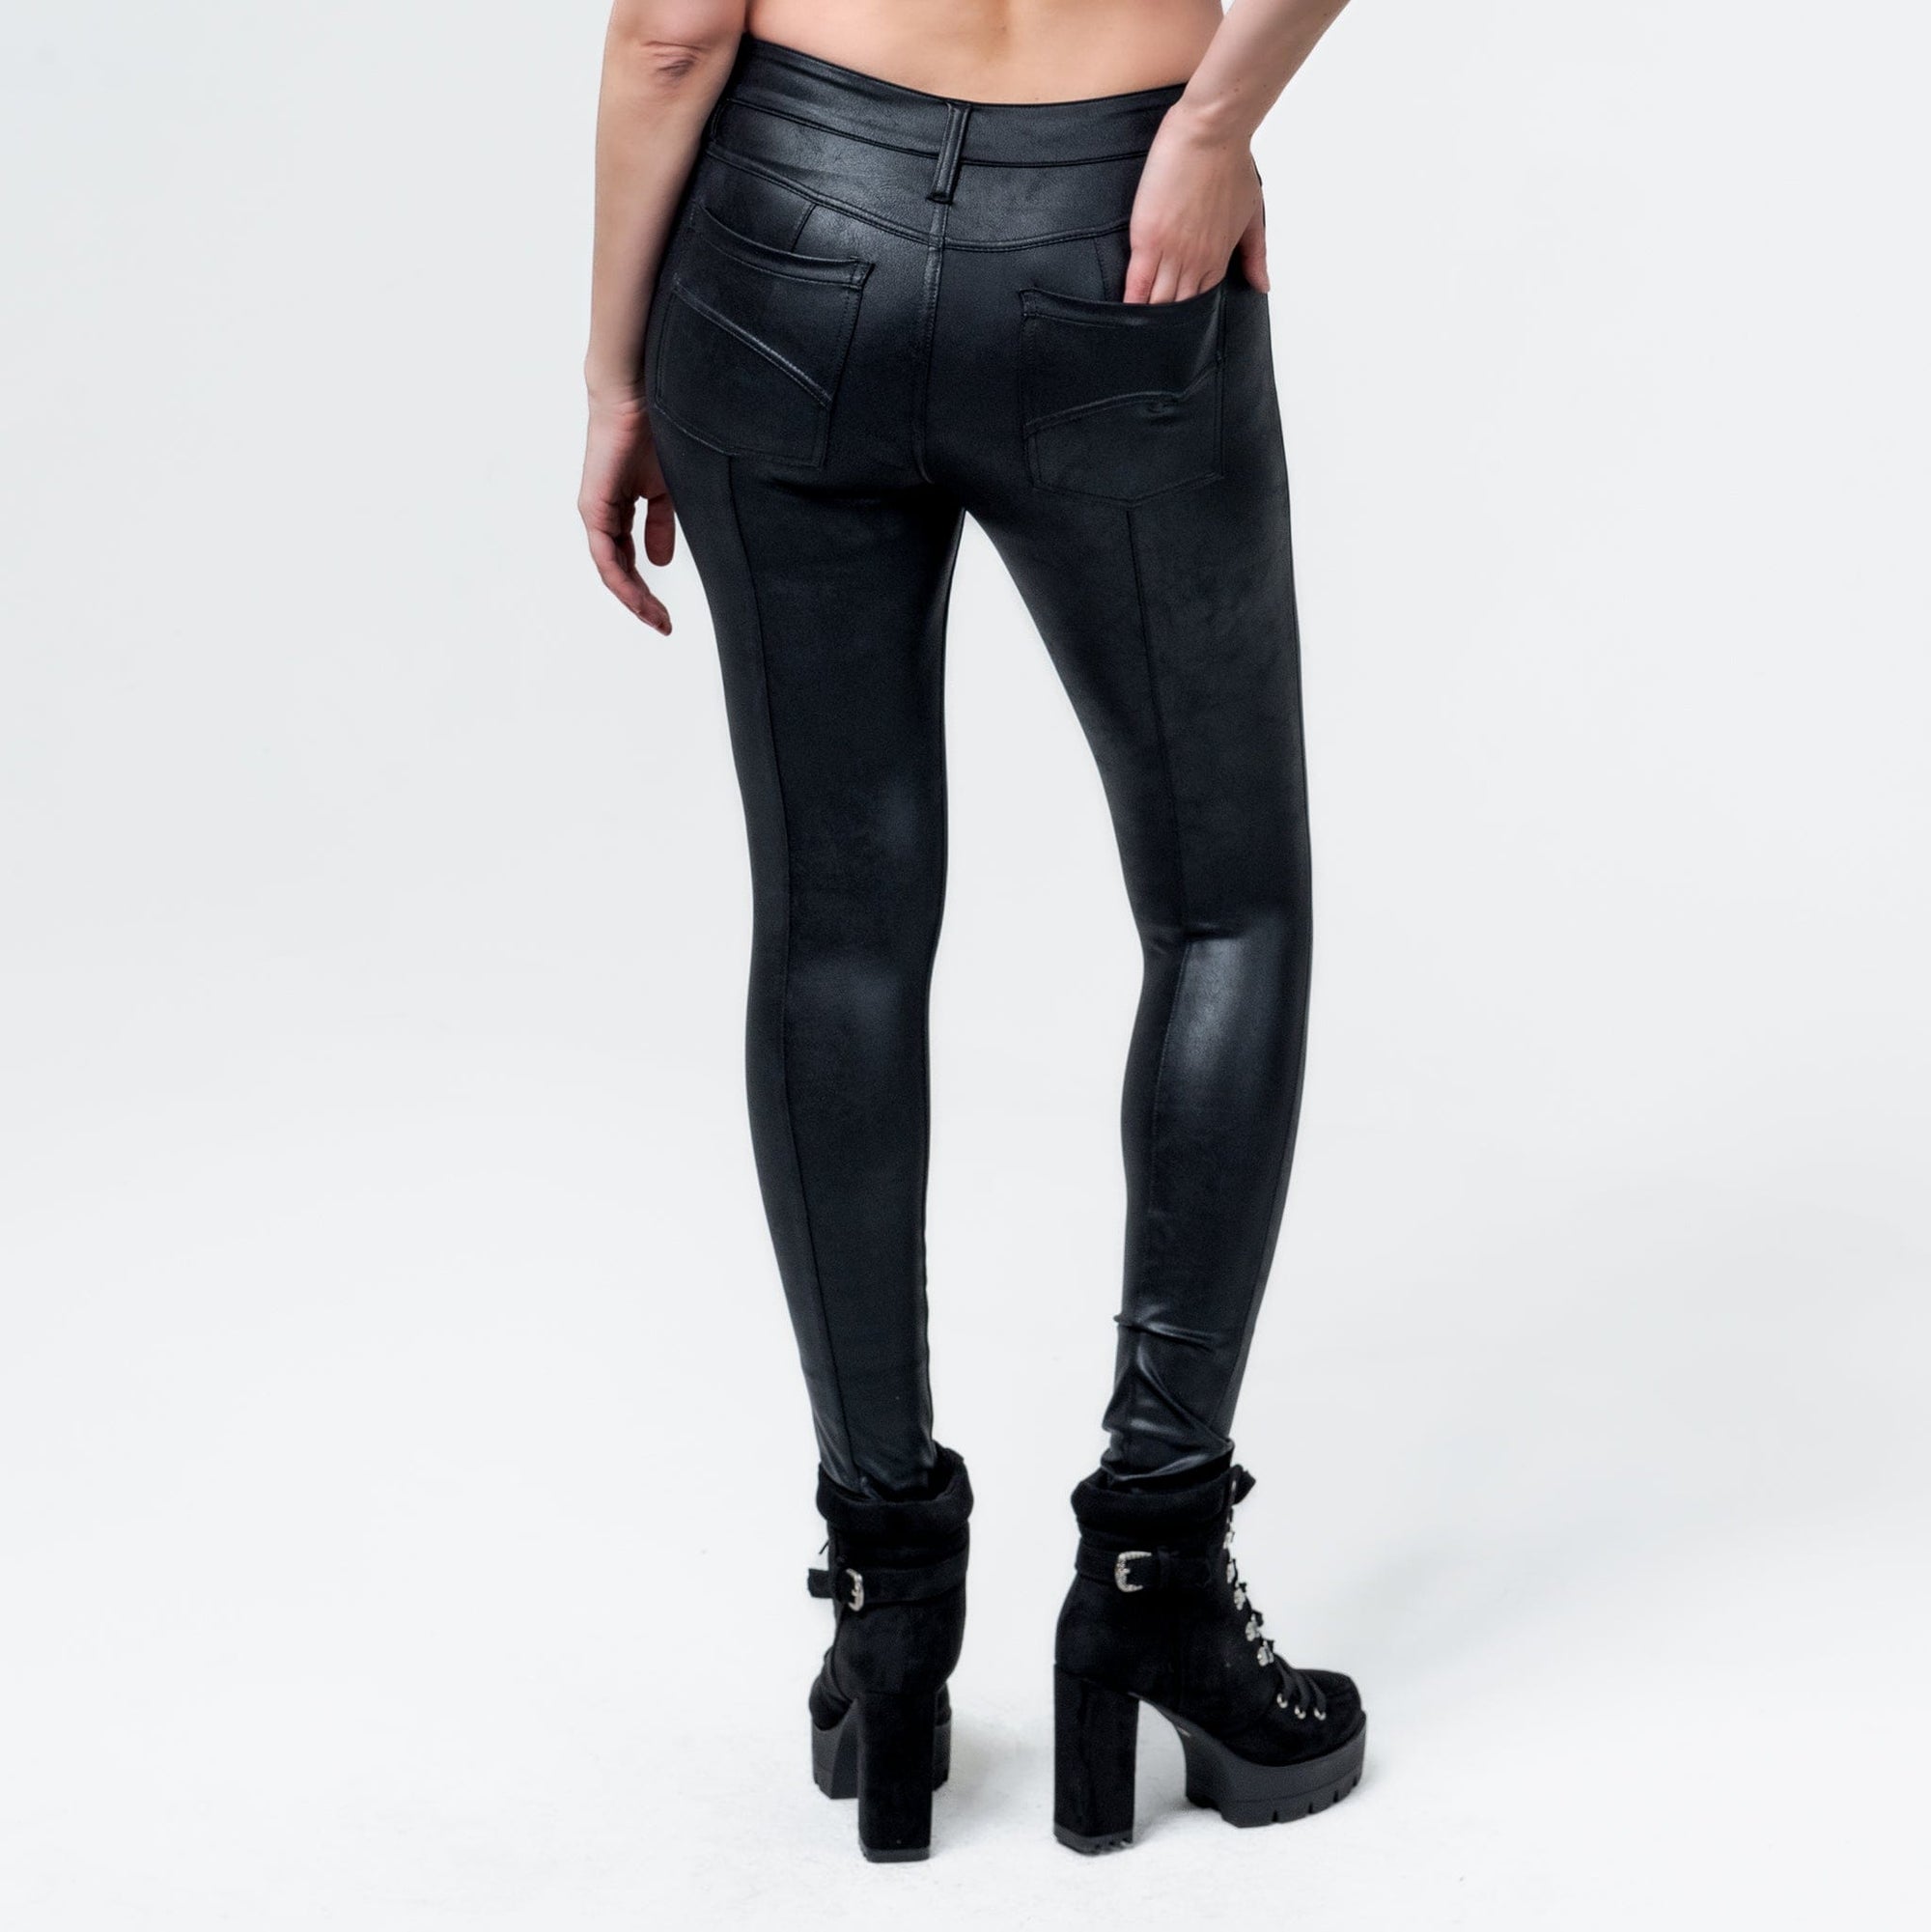 Wornstar Clothing Womens Pants. Fearless Skinny Cut Pants - Black